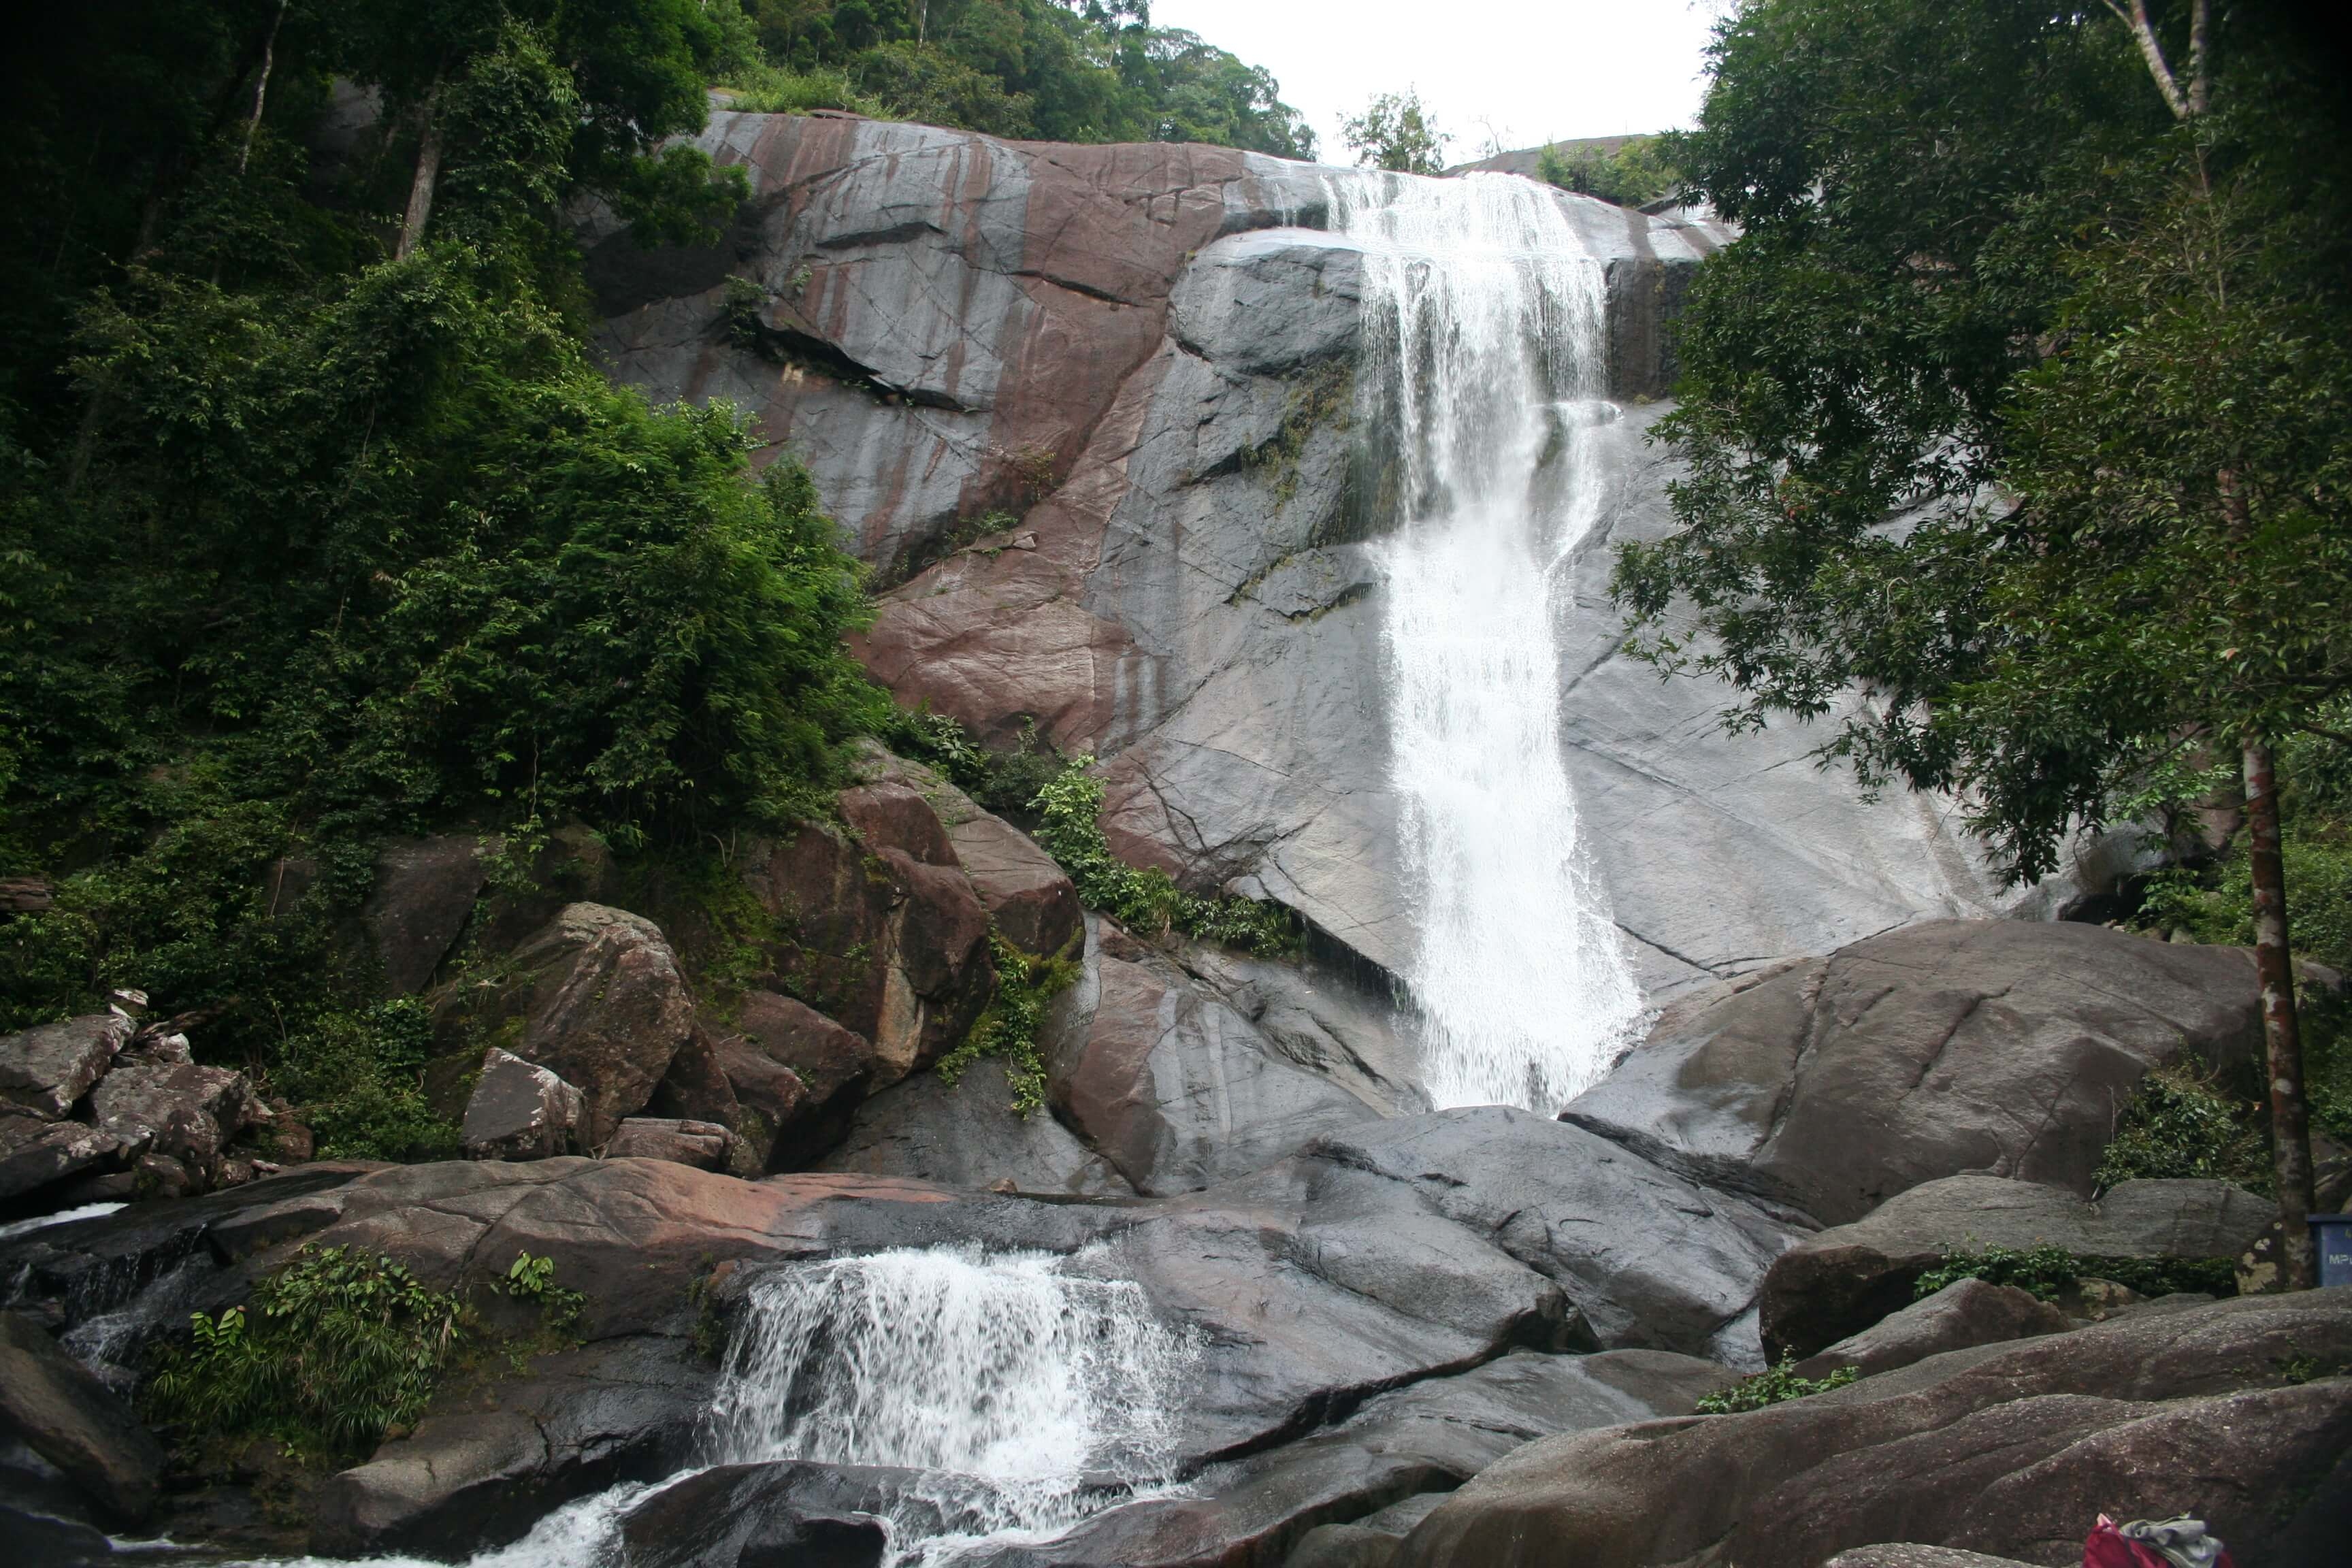 Telaga tujuh waterfalls